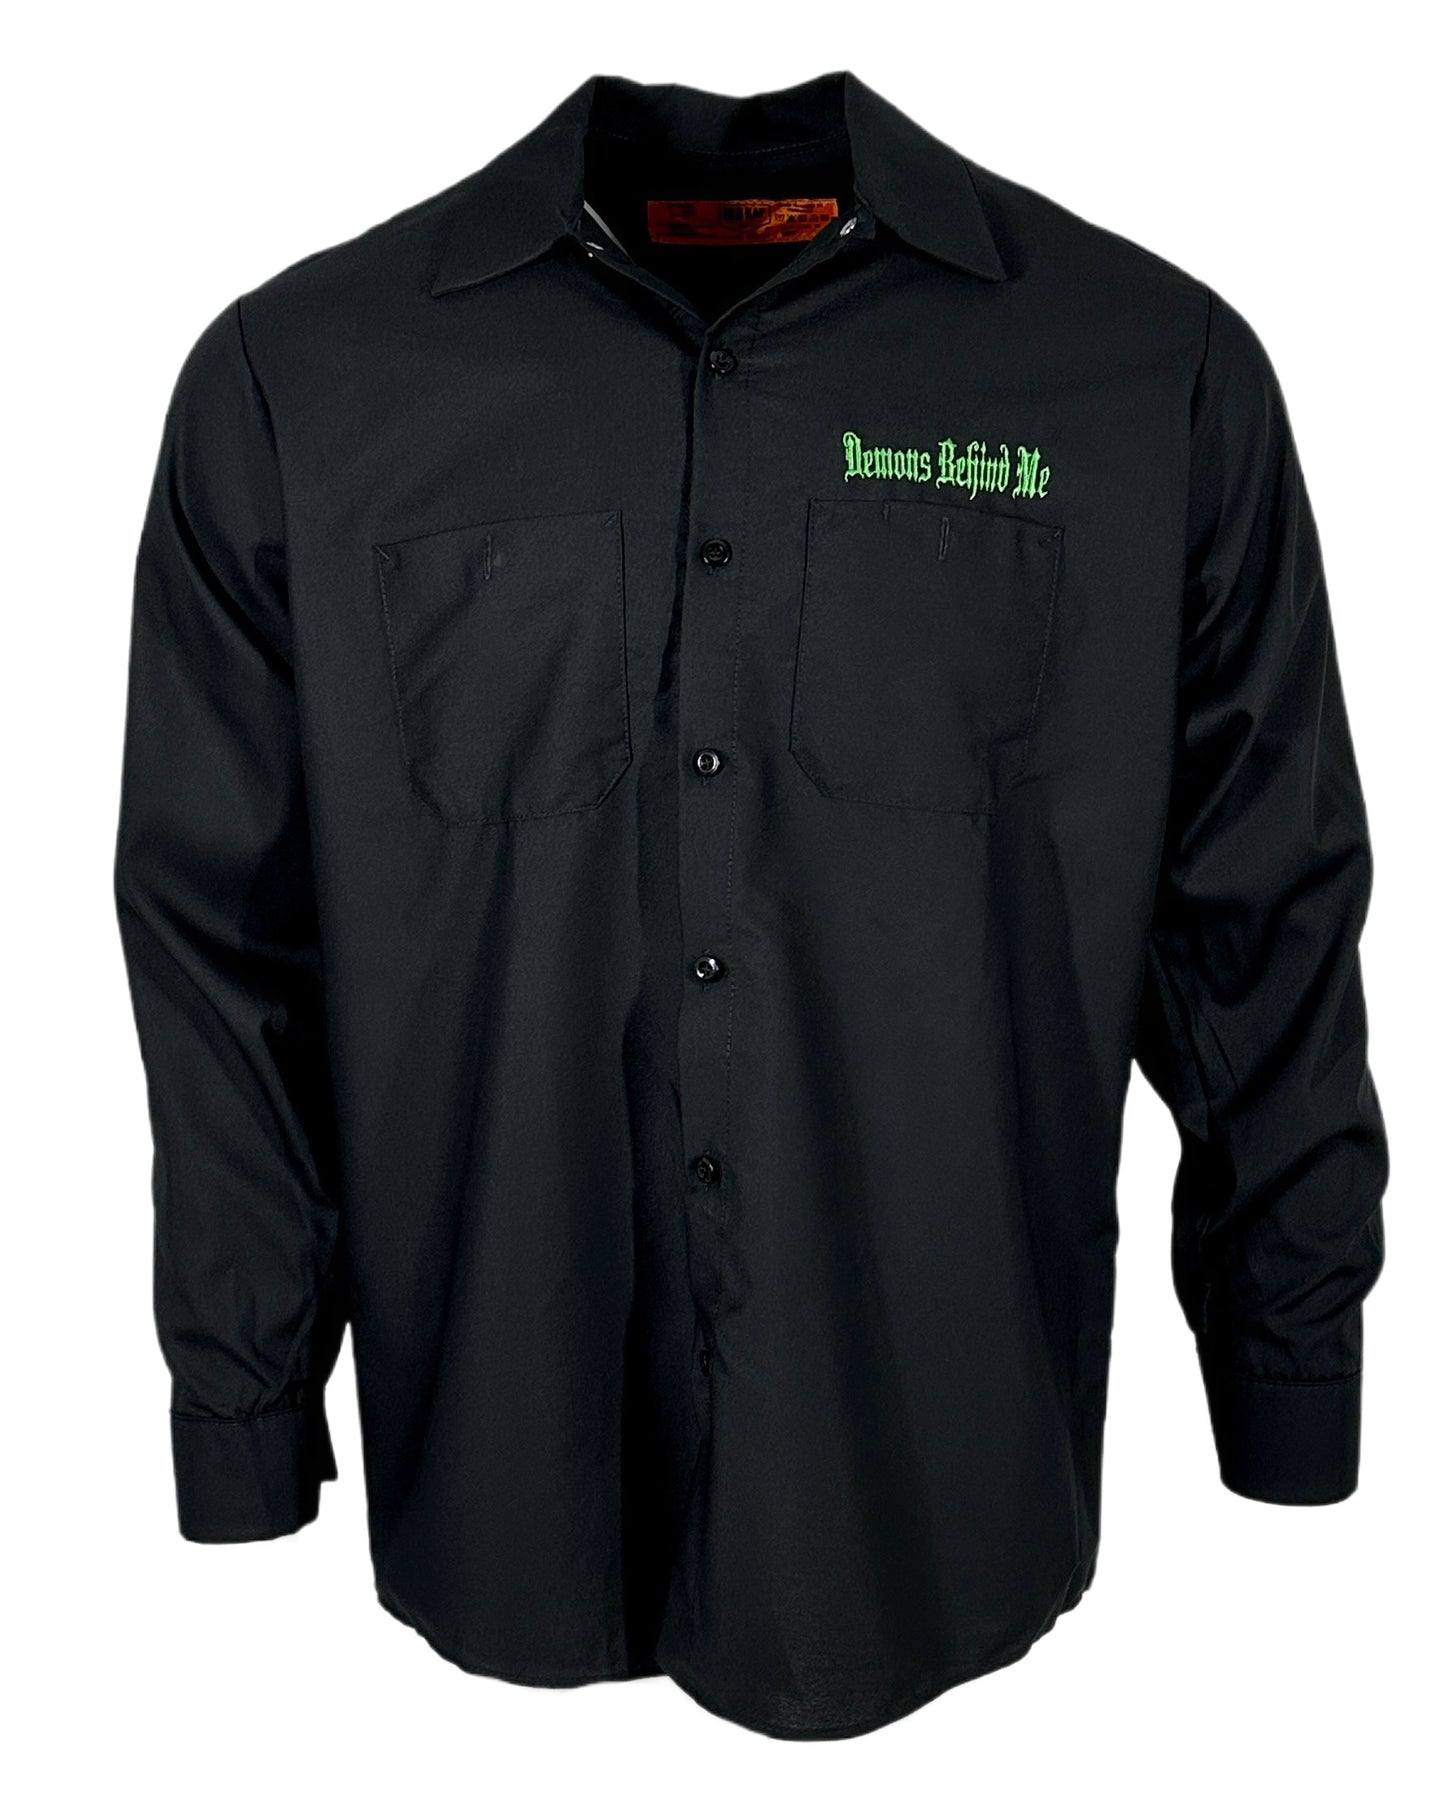 Men's Long Sleeve Black Embroidered Shop Shirt - Green Logo